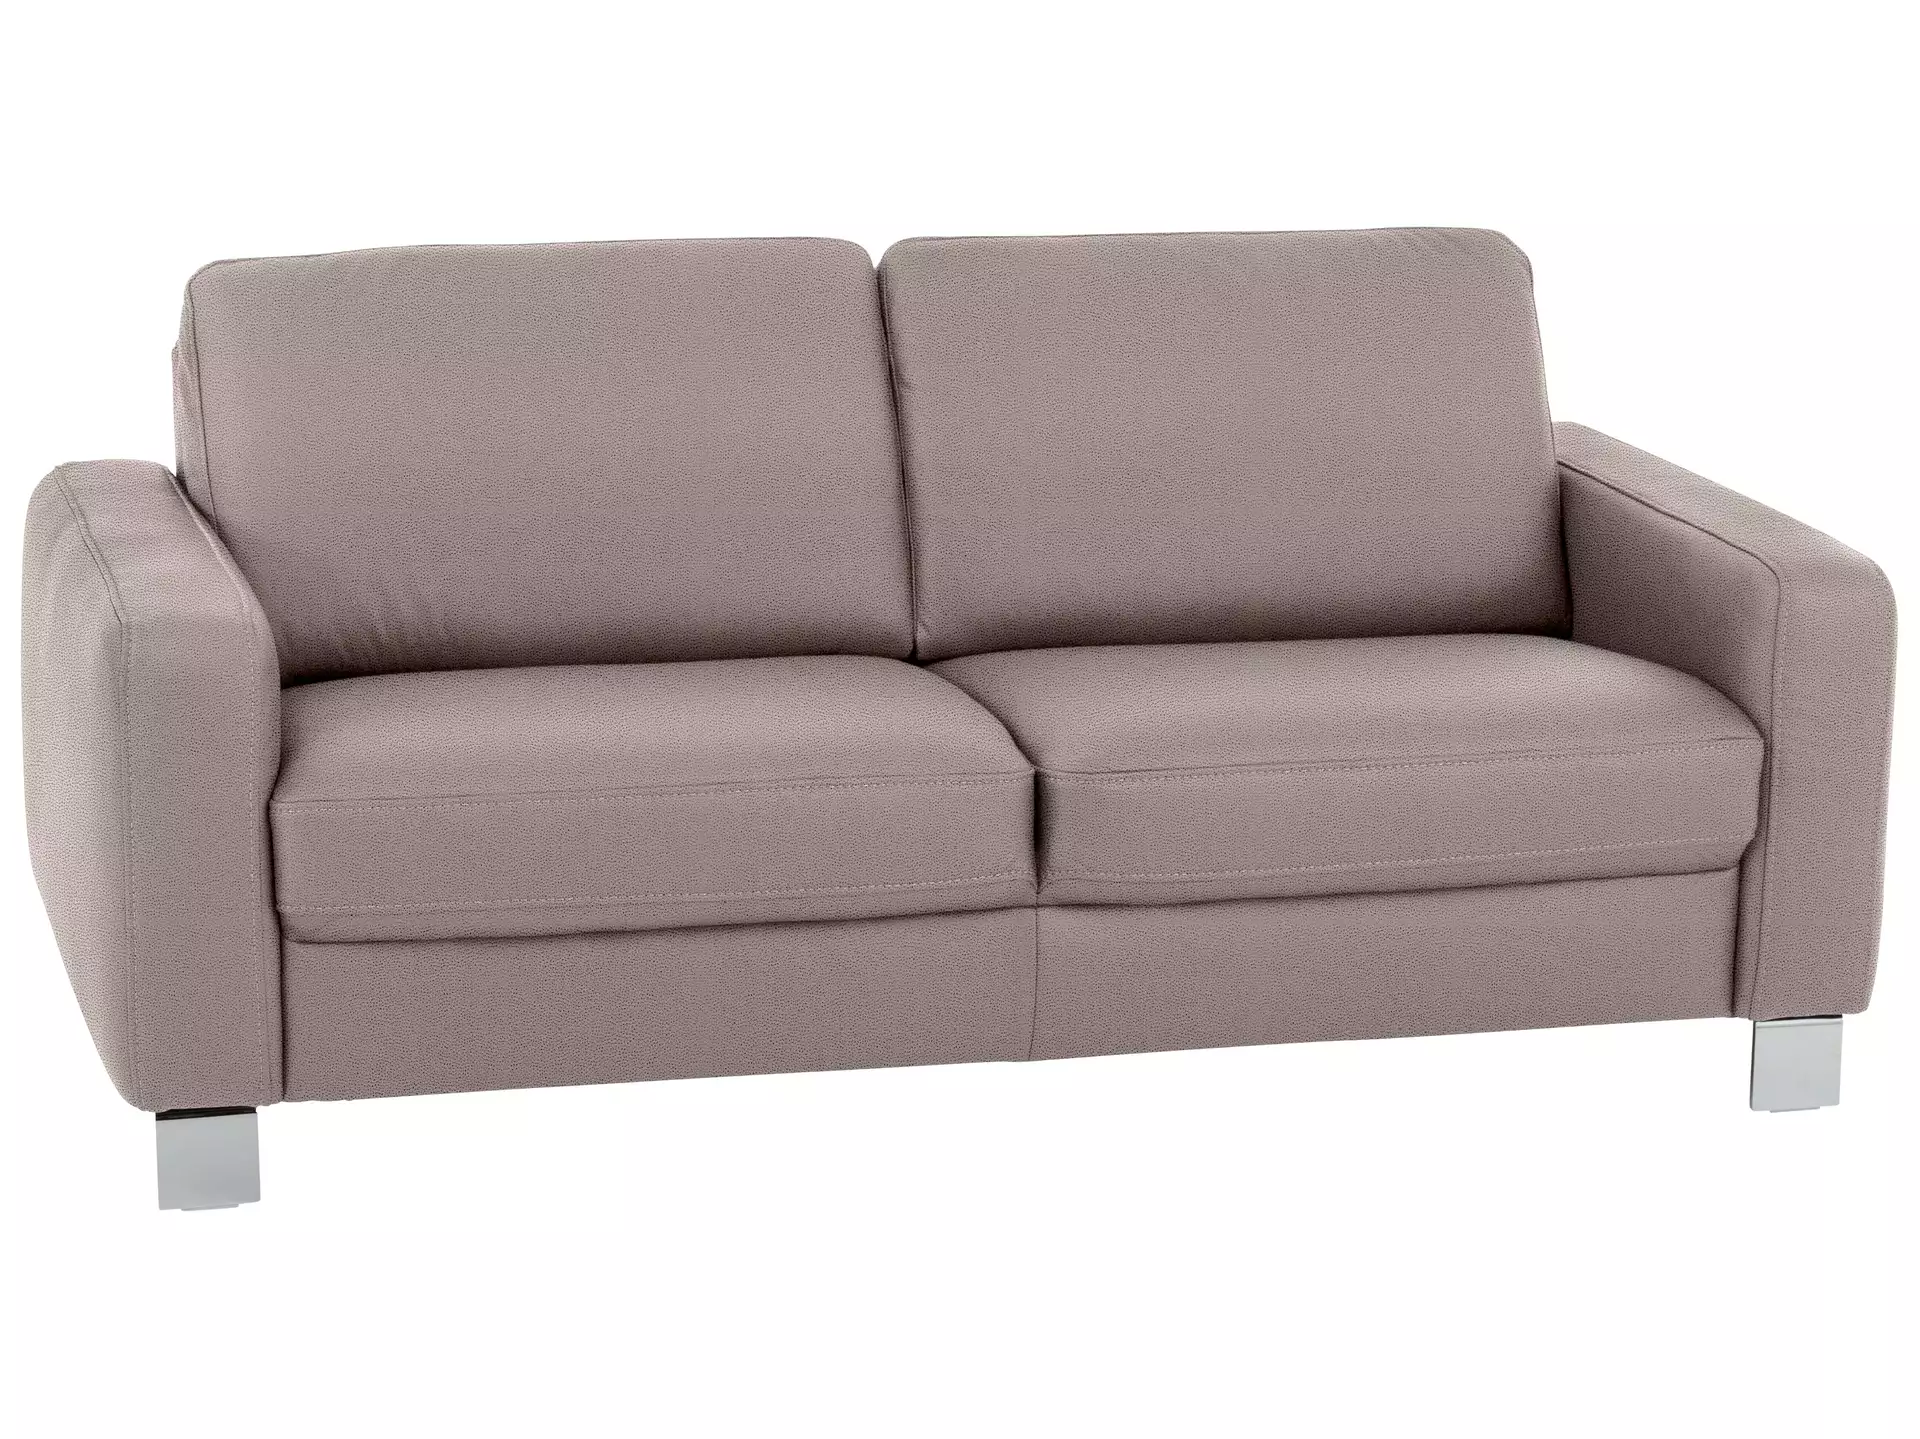 Sofa Shetland Basic B: 188 cm Polipol / Farbe: Alu / Material: Microfaser Basic